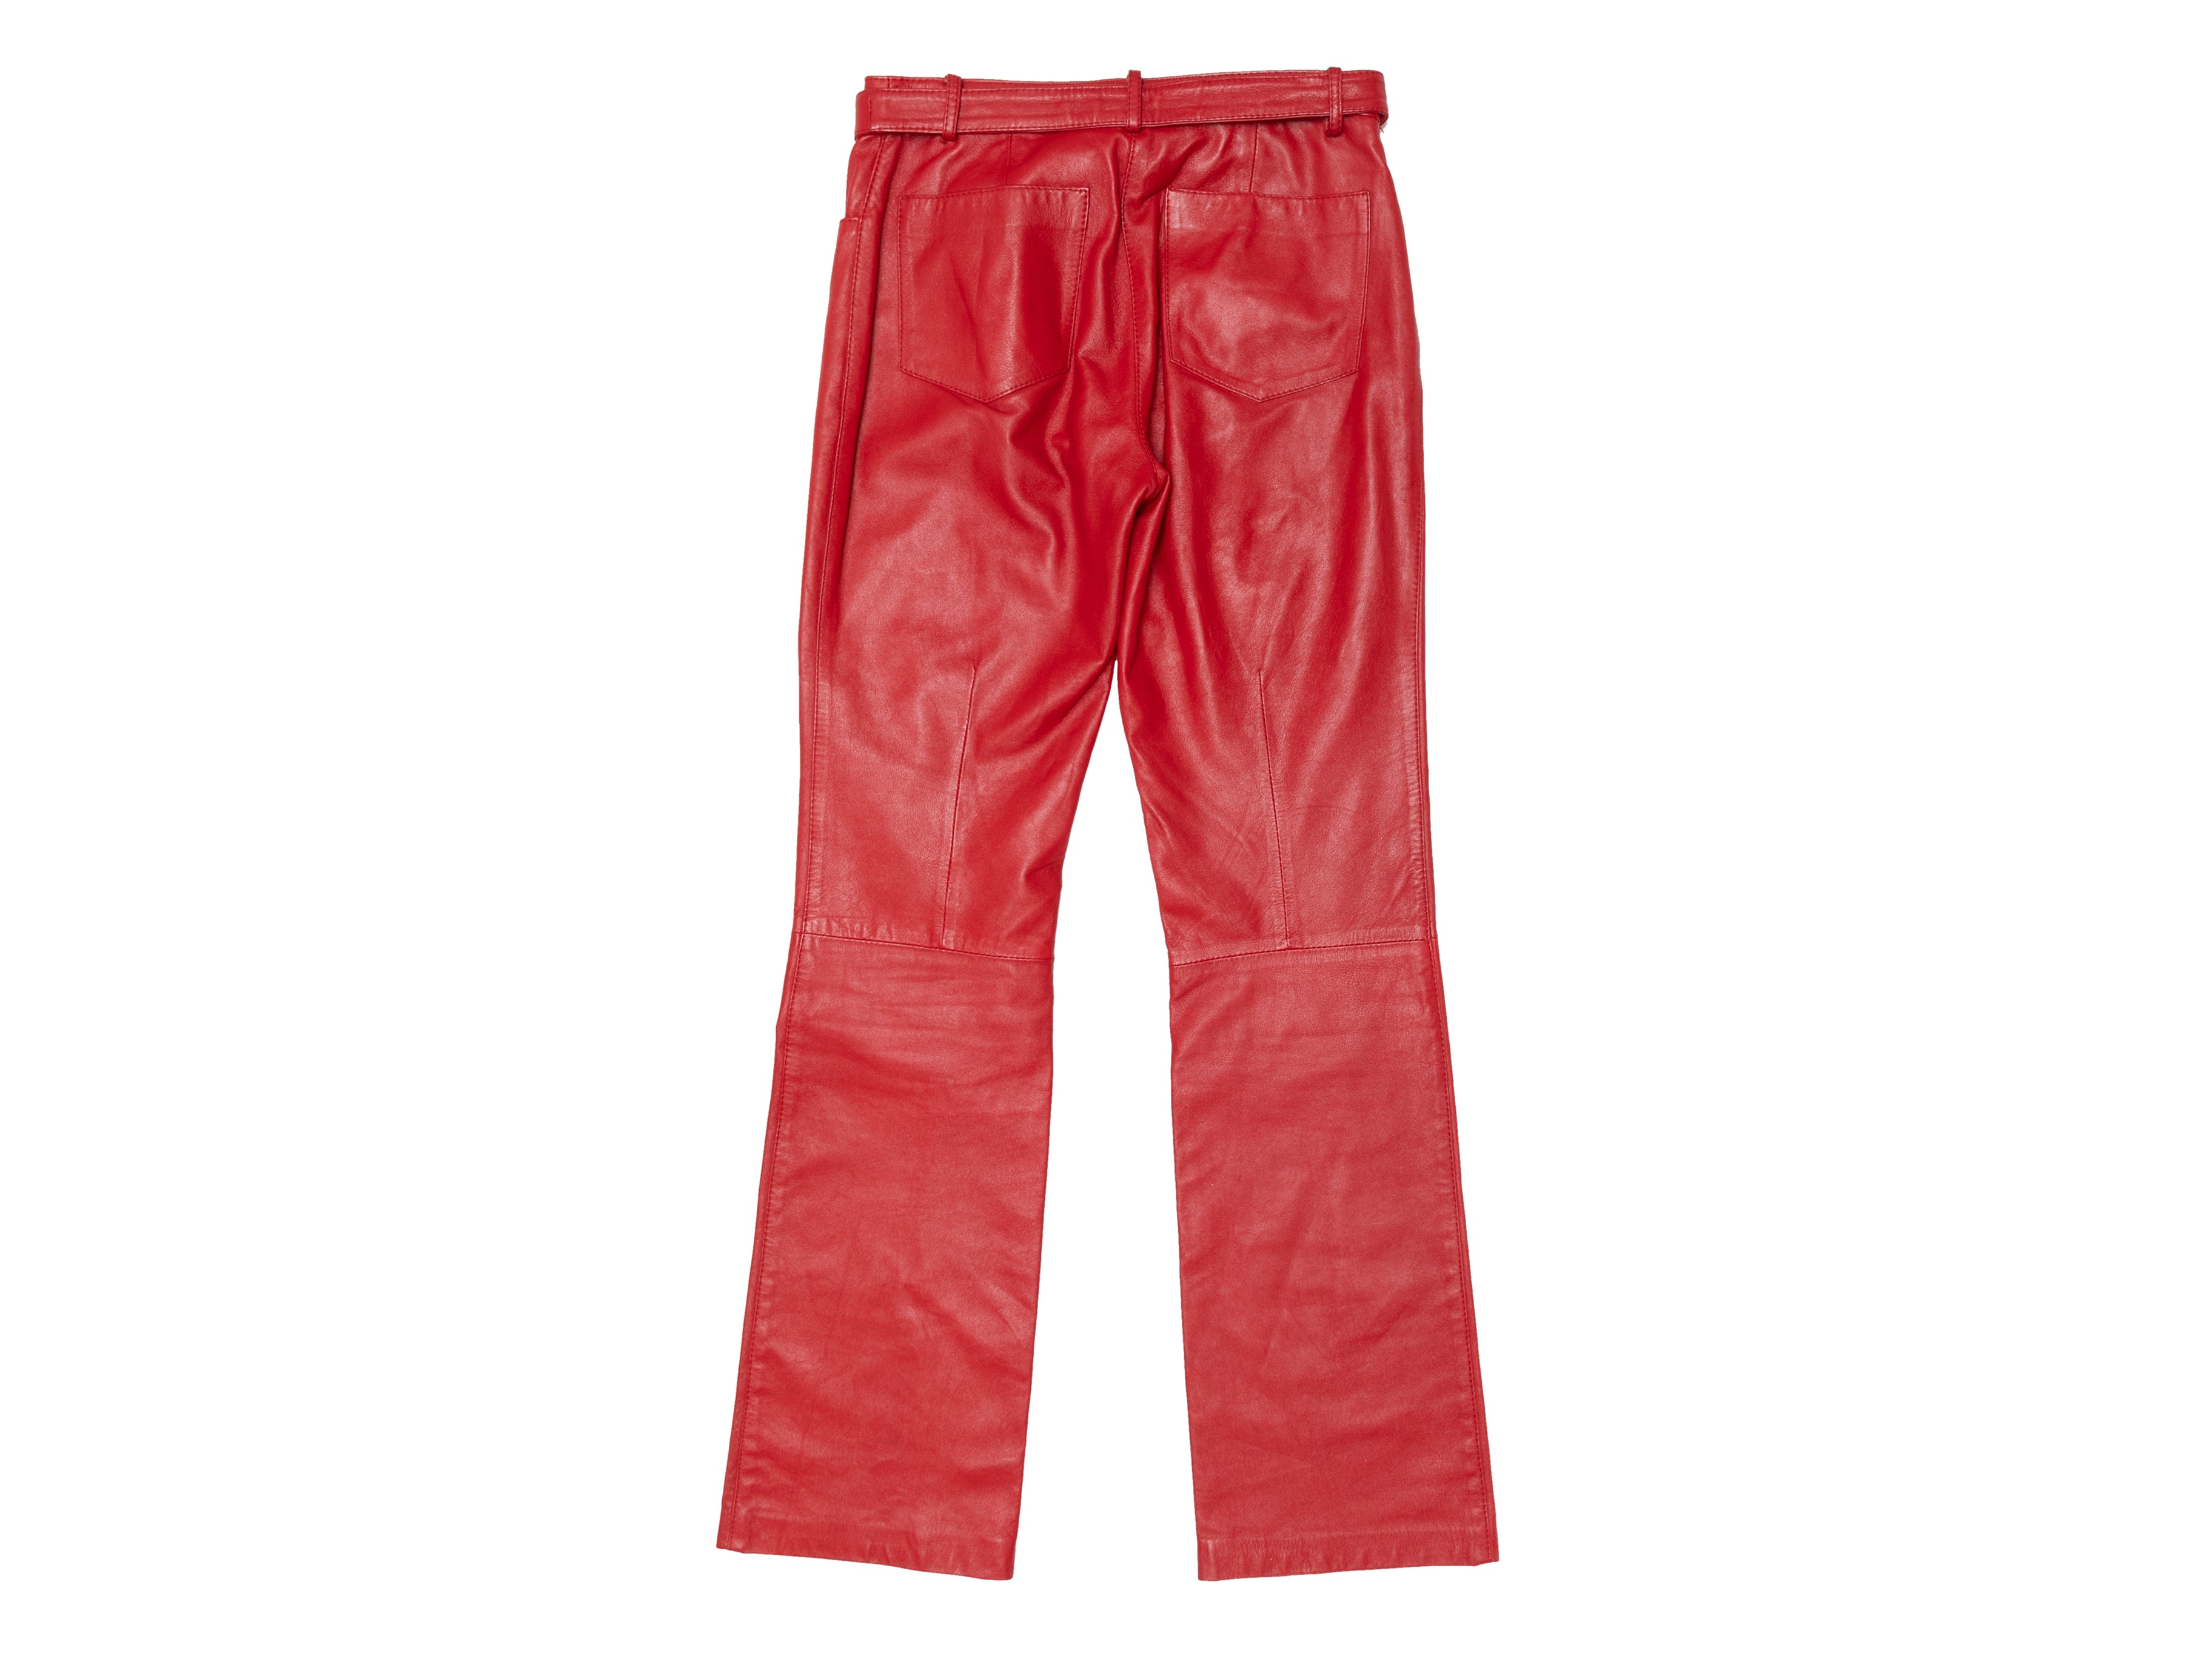 Leather Pants Size US S/M